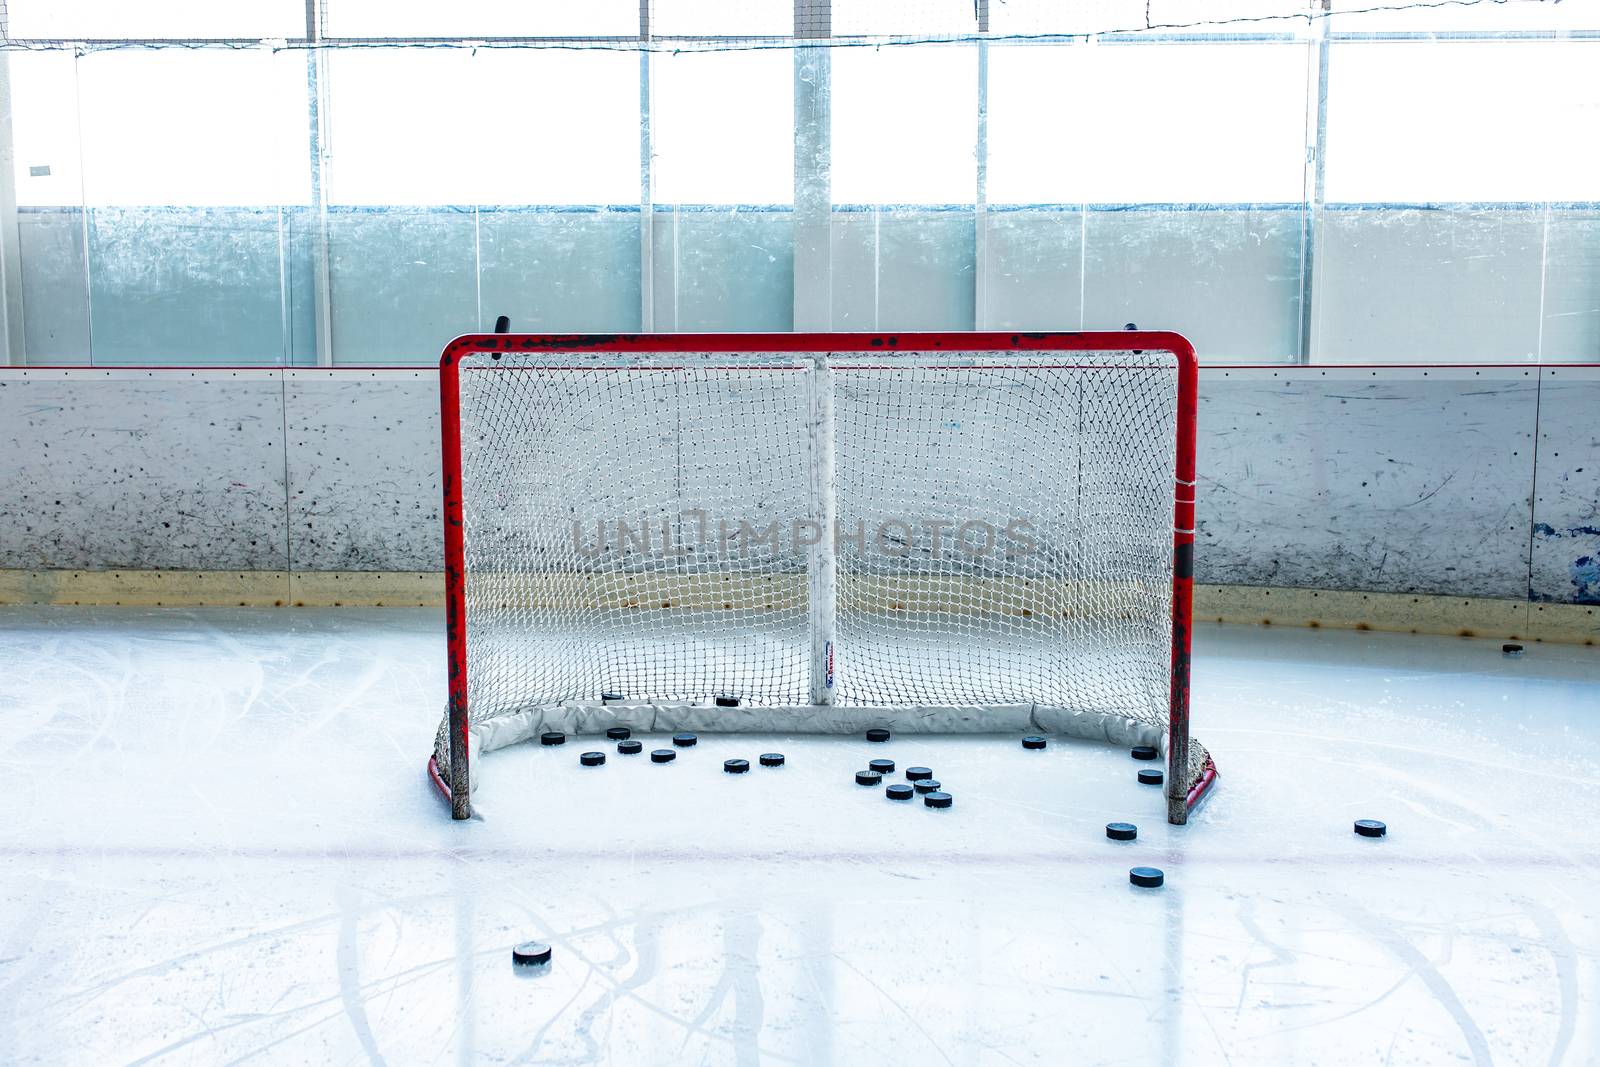 ice hockey ice rink, pucks and empty red net